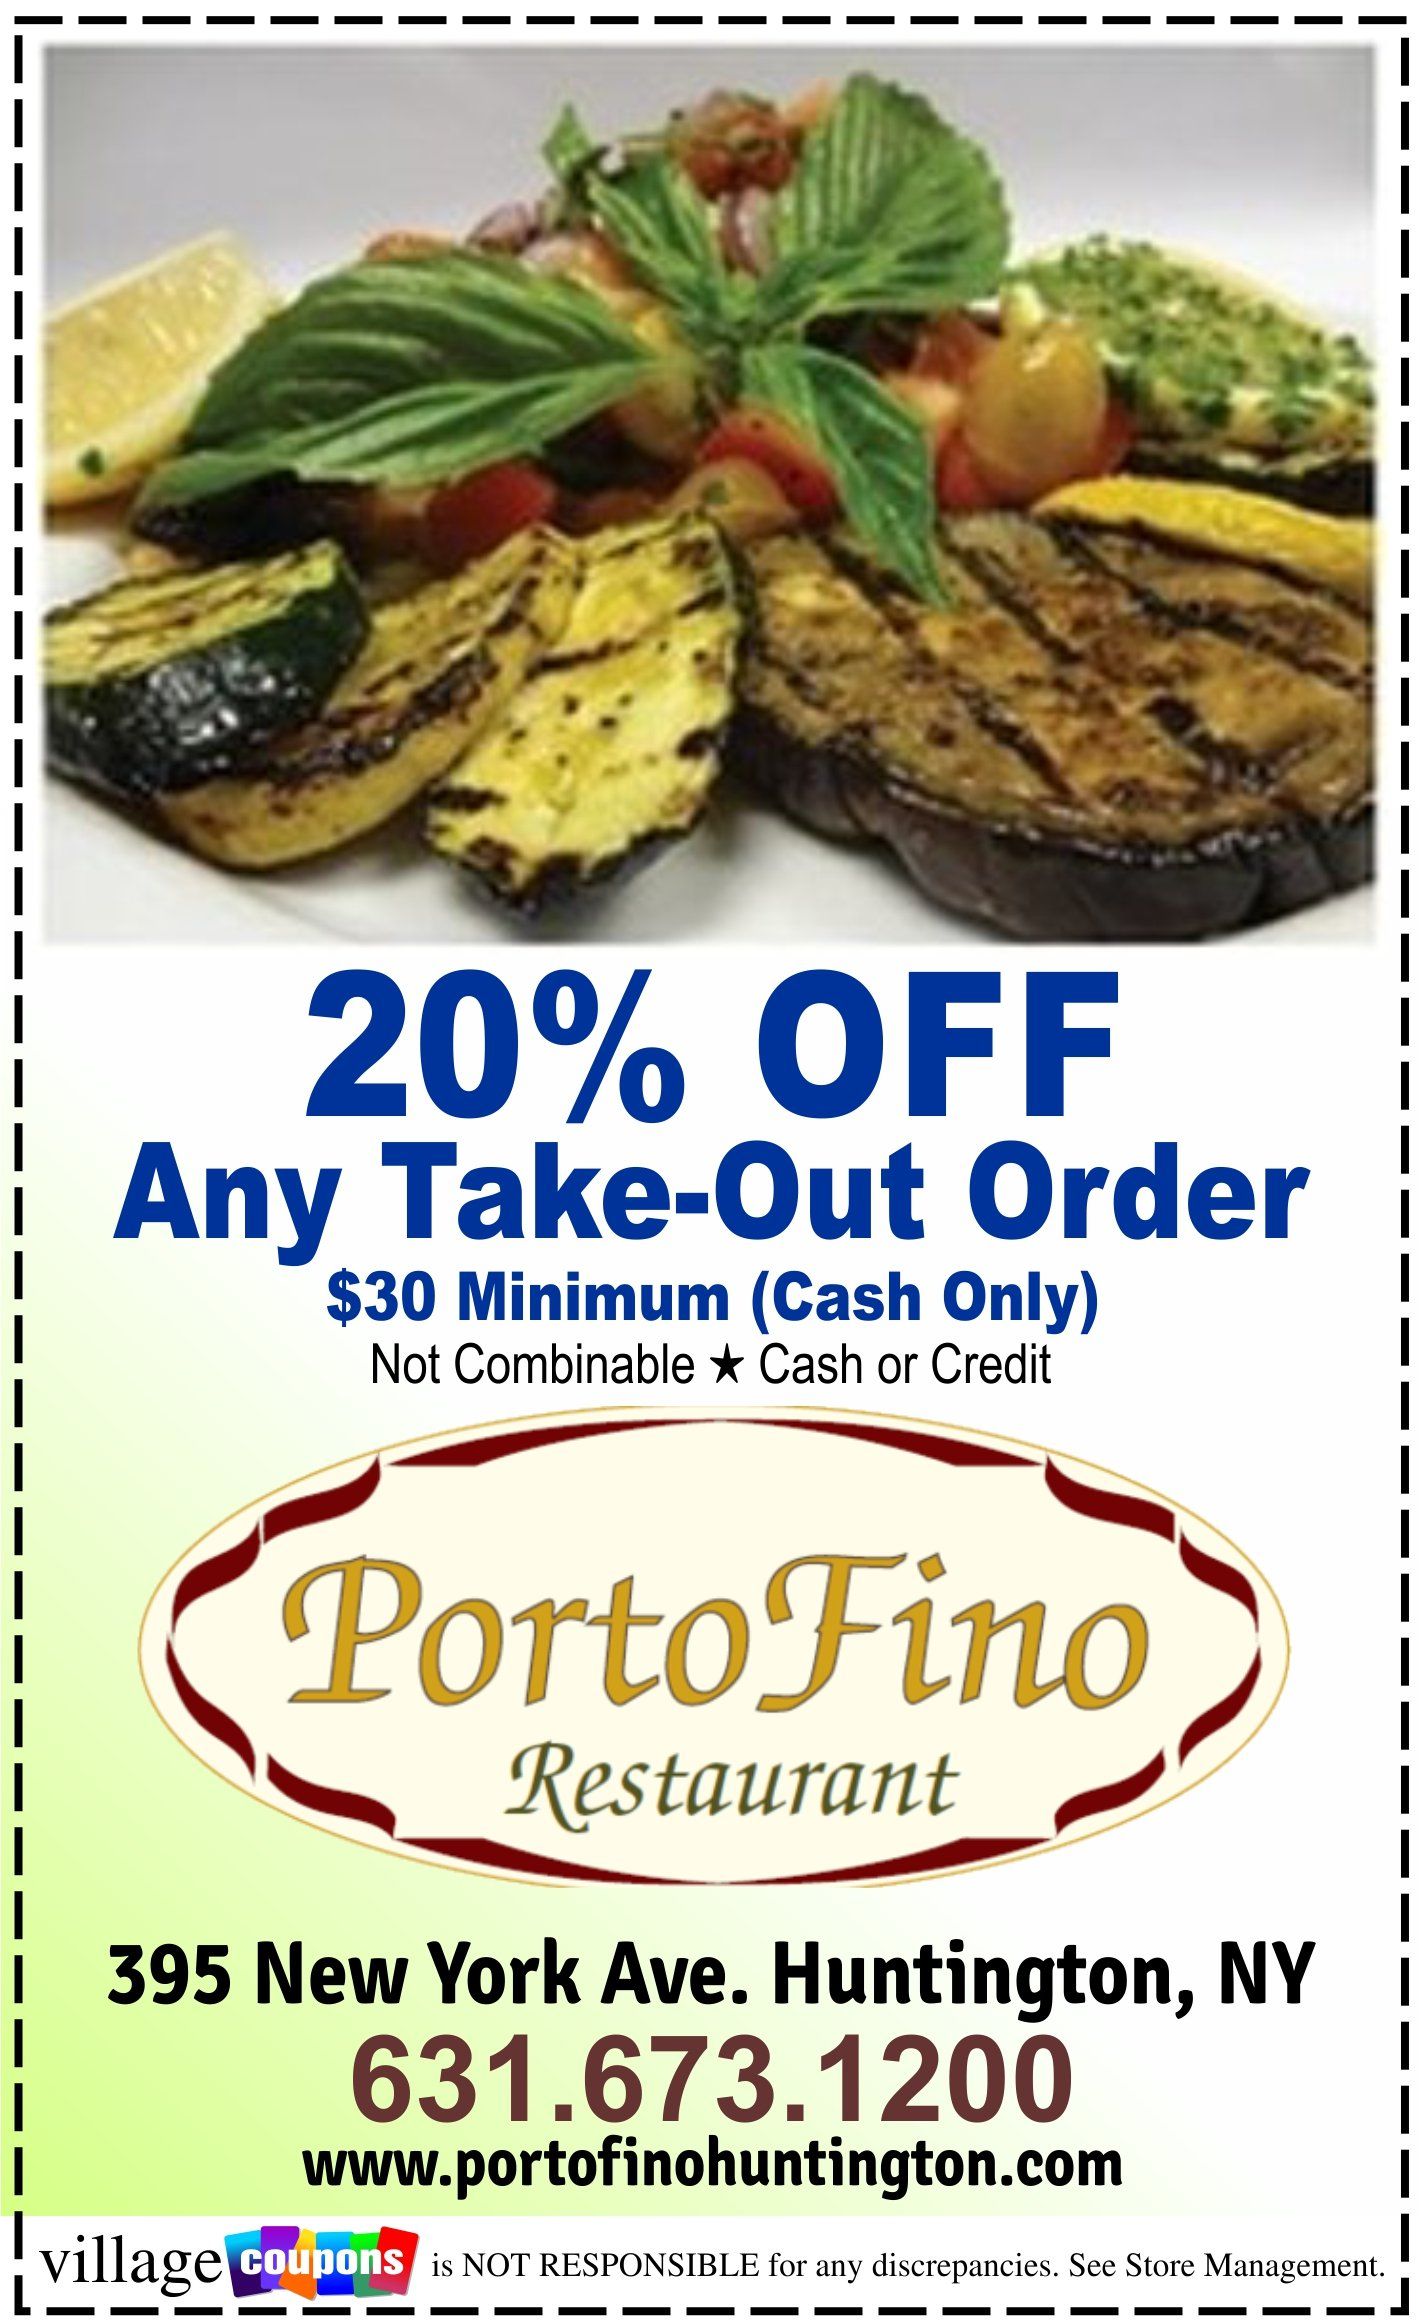 An advertisement for portofino restaurant in new york